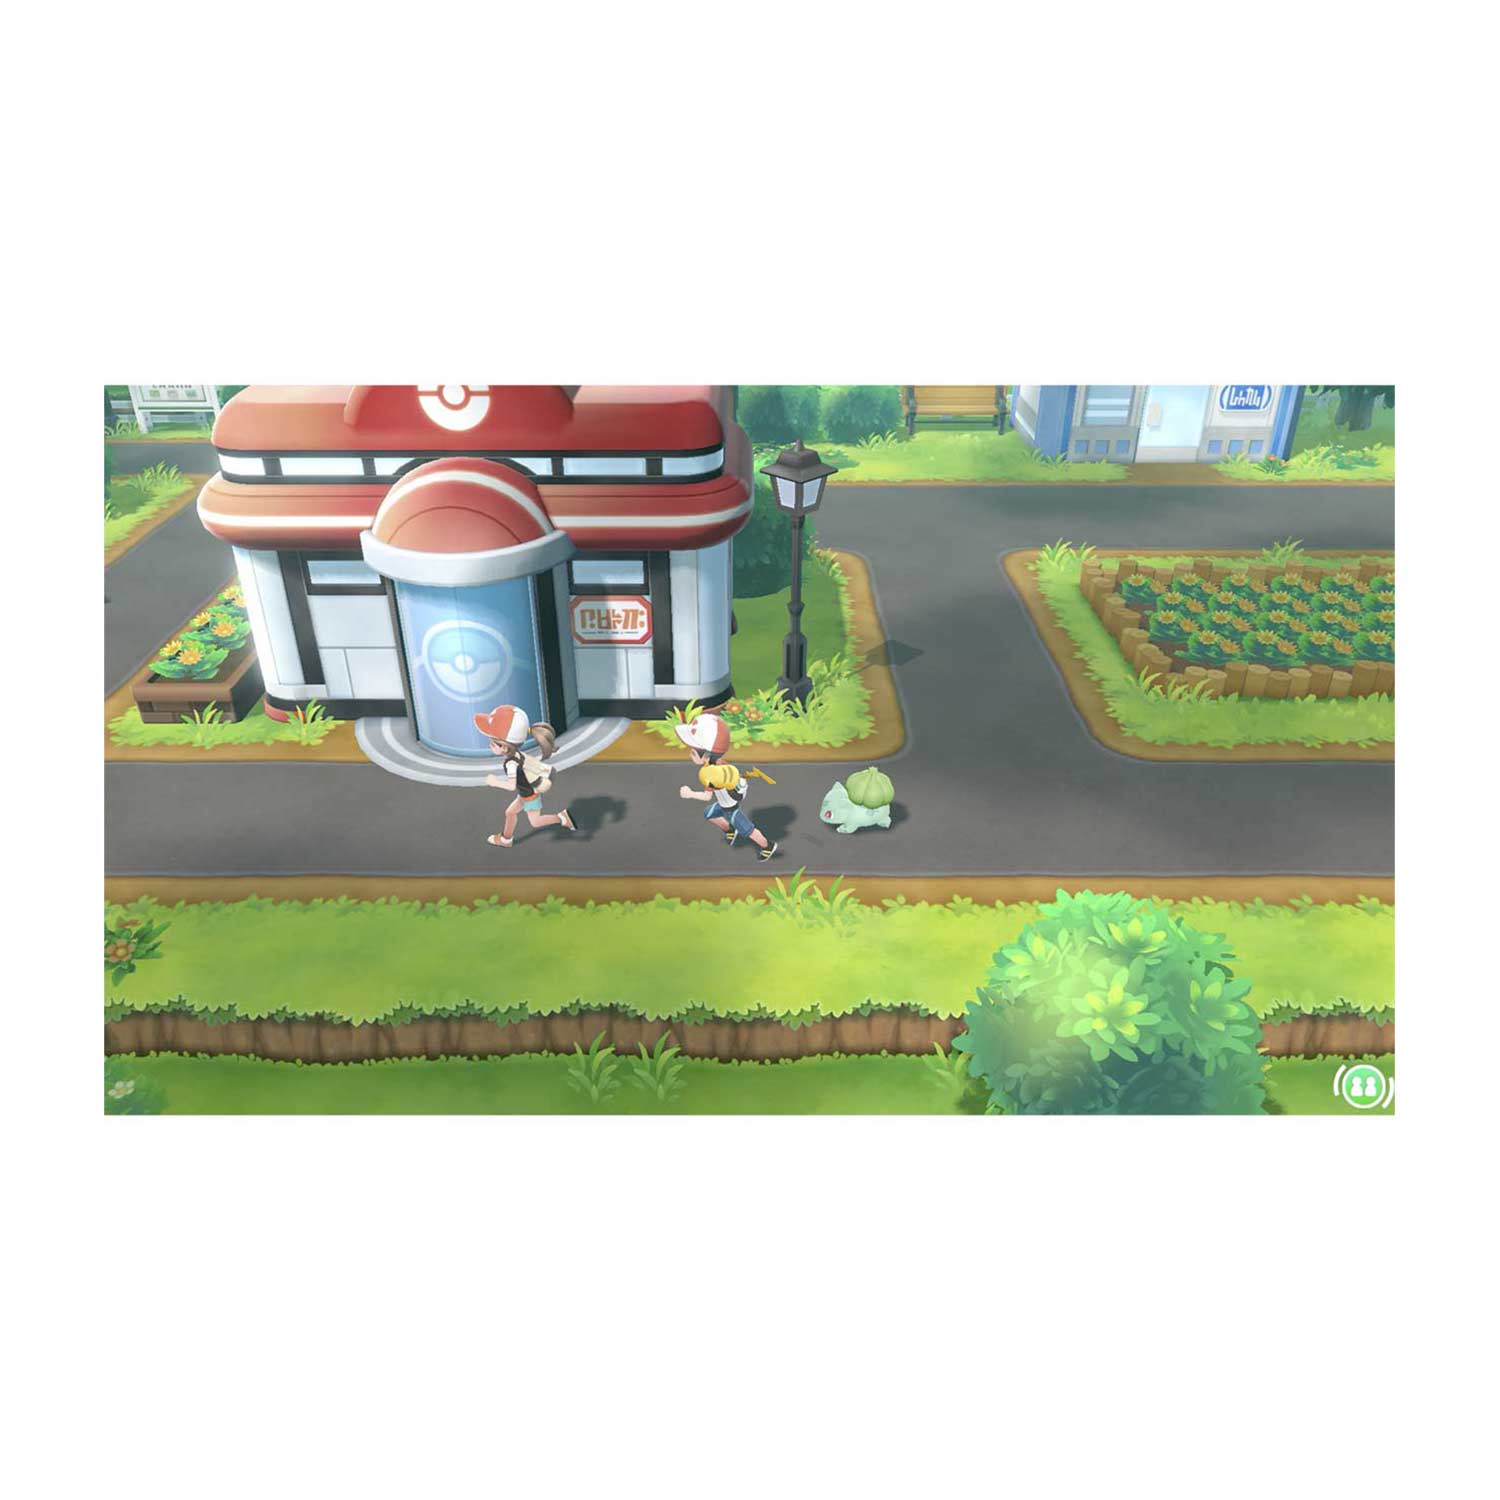 Pokémon Lets Go Eevee Poké Ball Plus Pack For Nintendo Switch